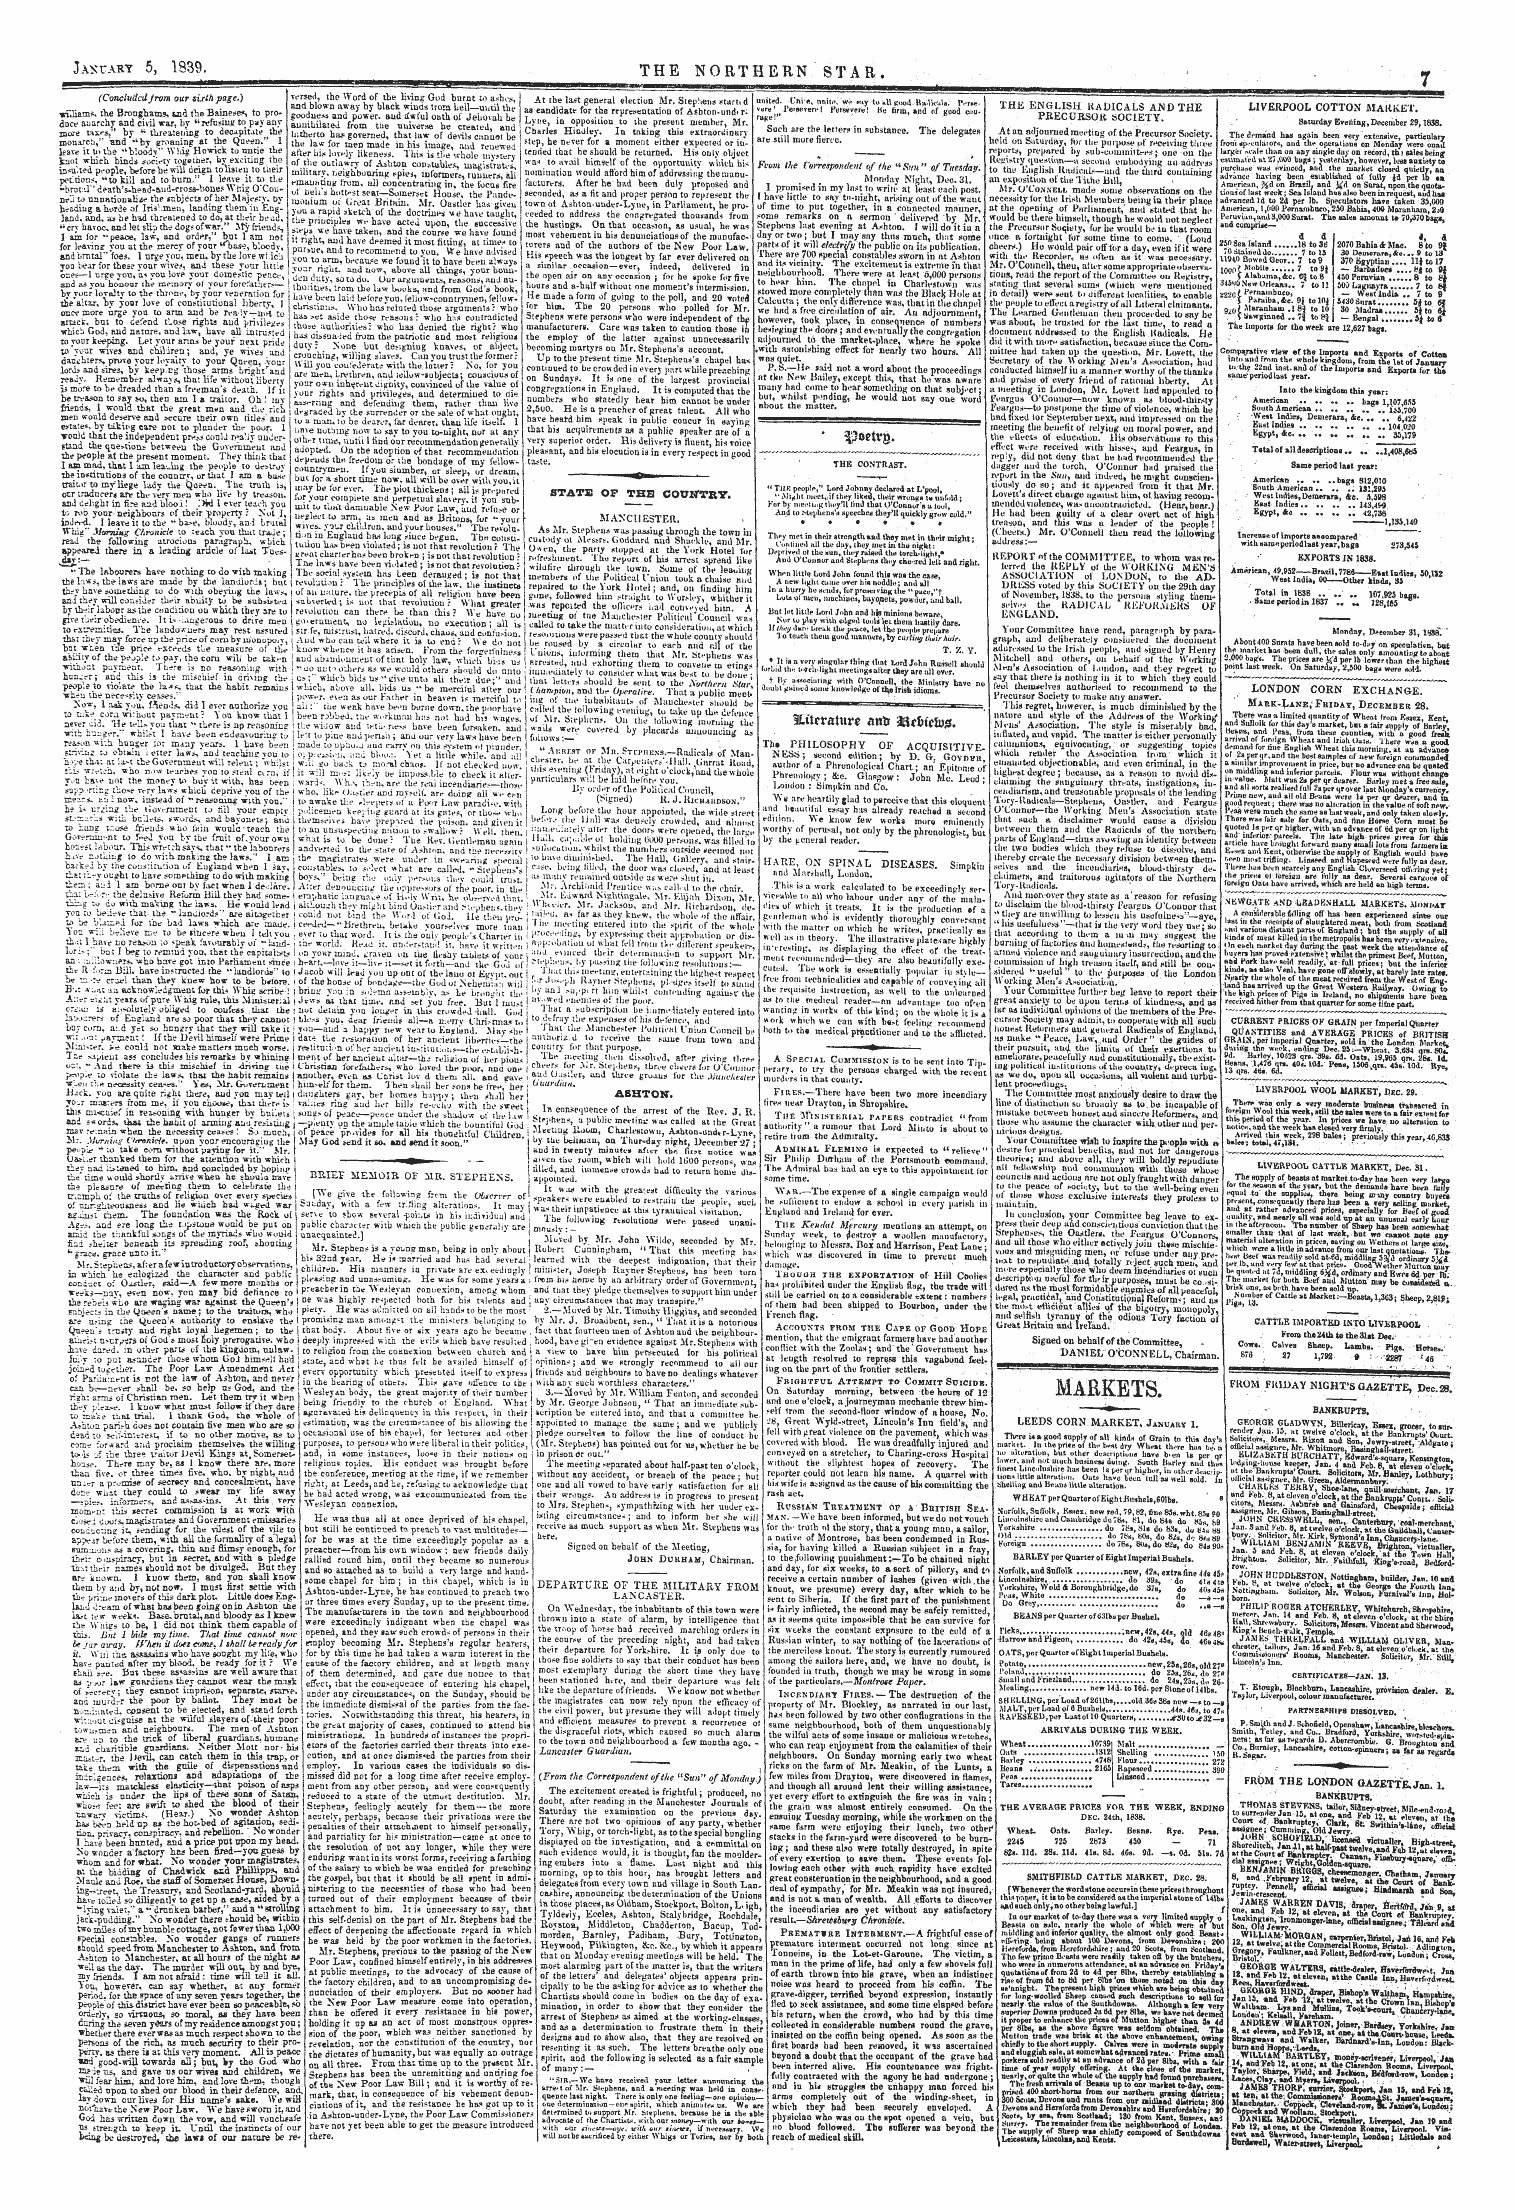 Northern Star (1837-1852): jS F Y, 1st edition - Ettctautr* Autr $U&Fe&£,